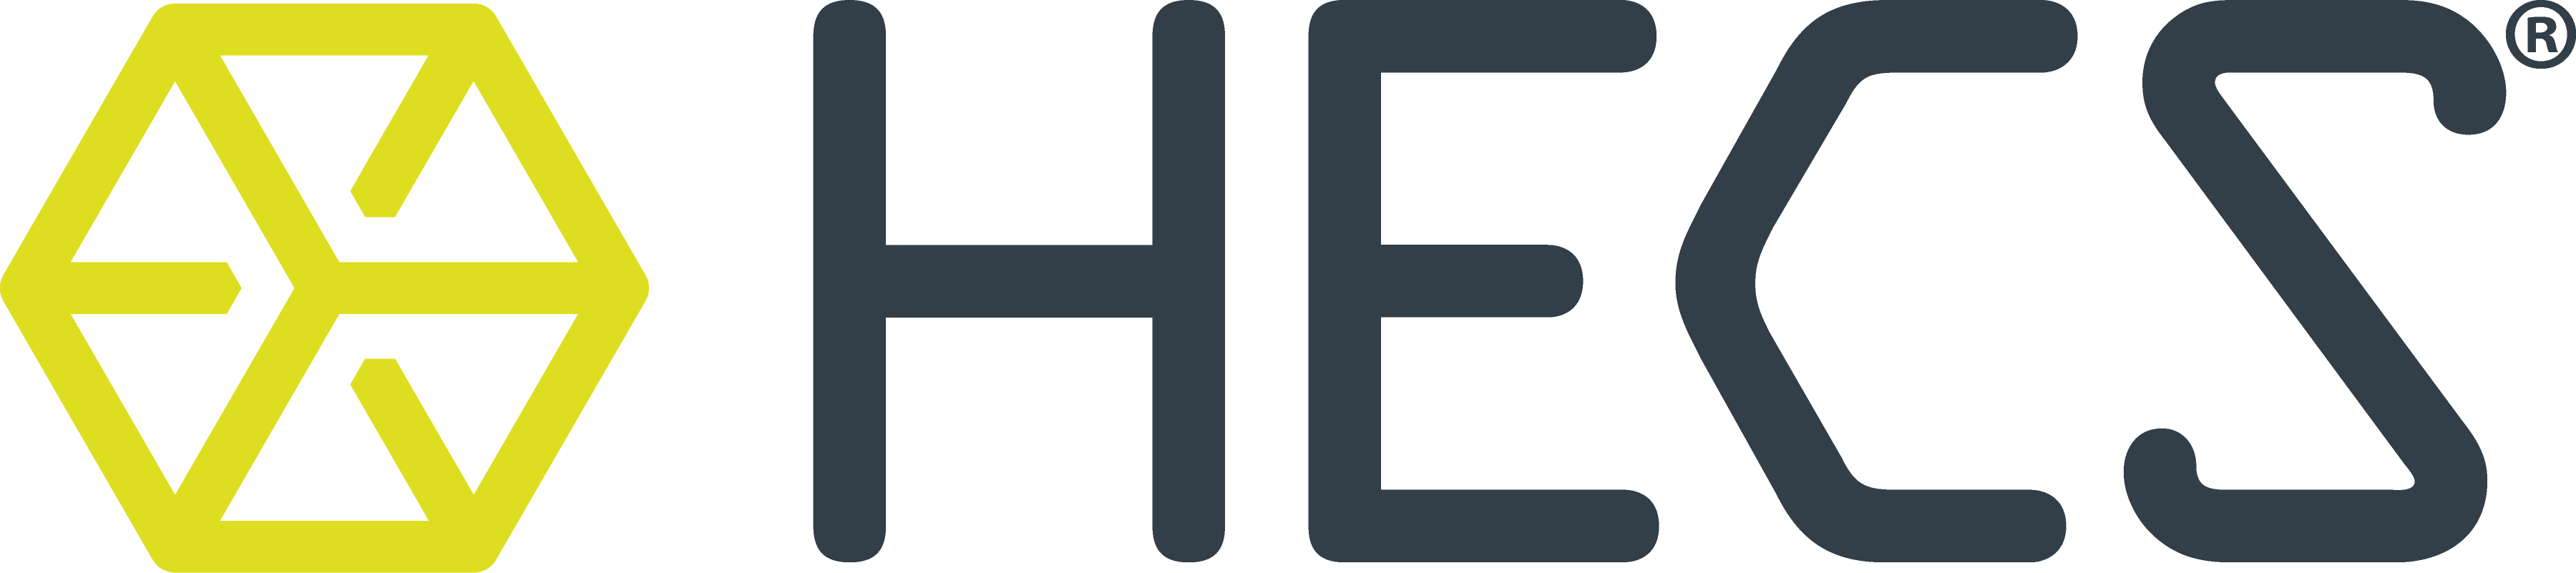 hecs logo package logotype full color rgb 1